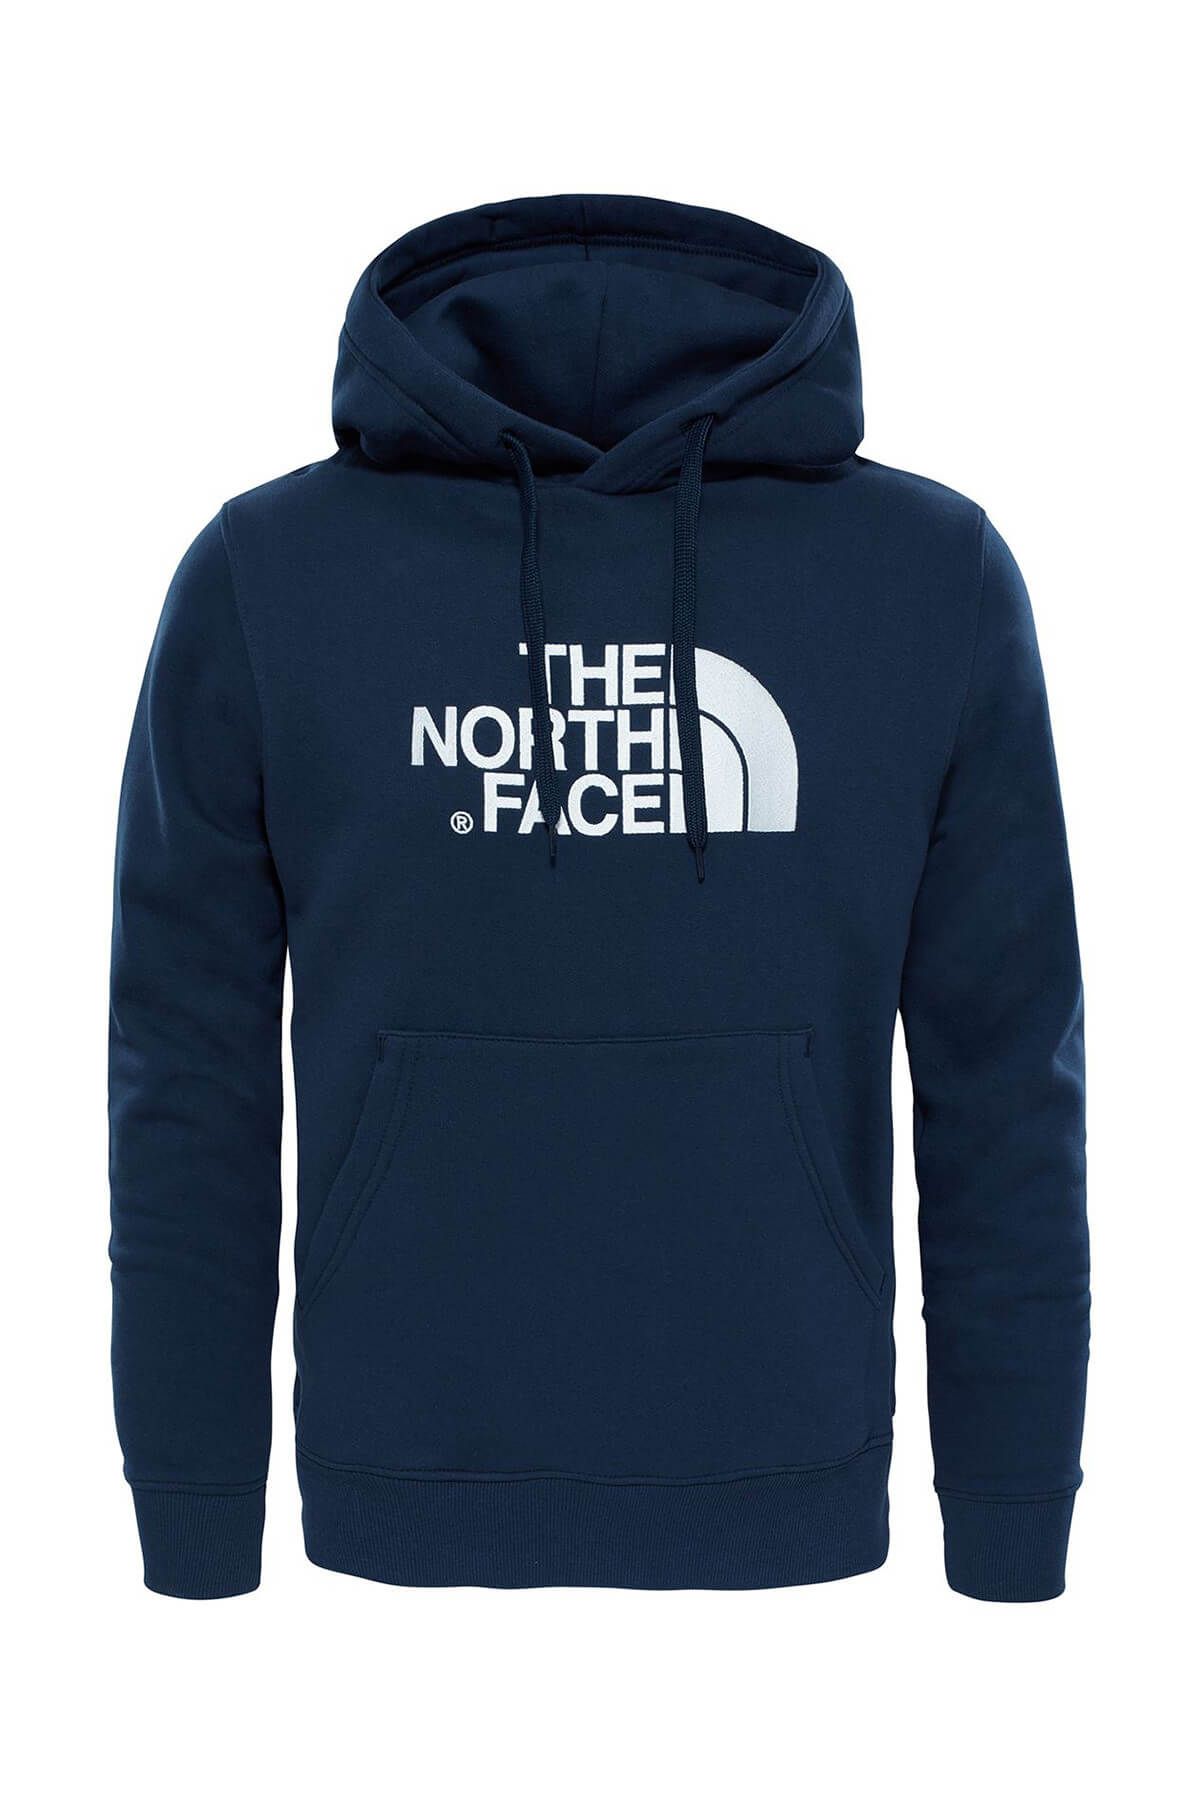 The North Face Erkek Sweatshirt - T0Ahjym6S - T0AHJYM6S